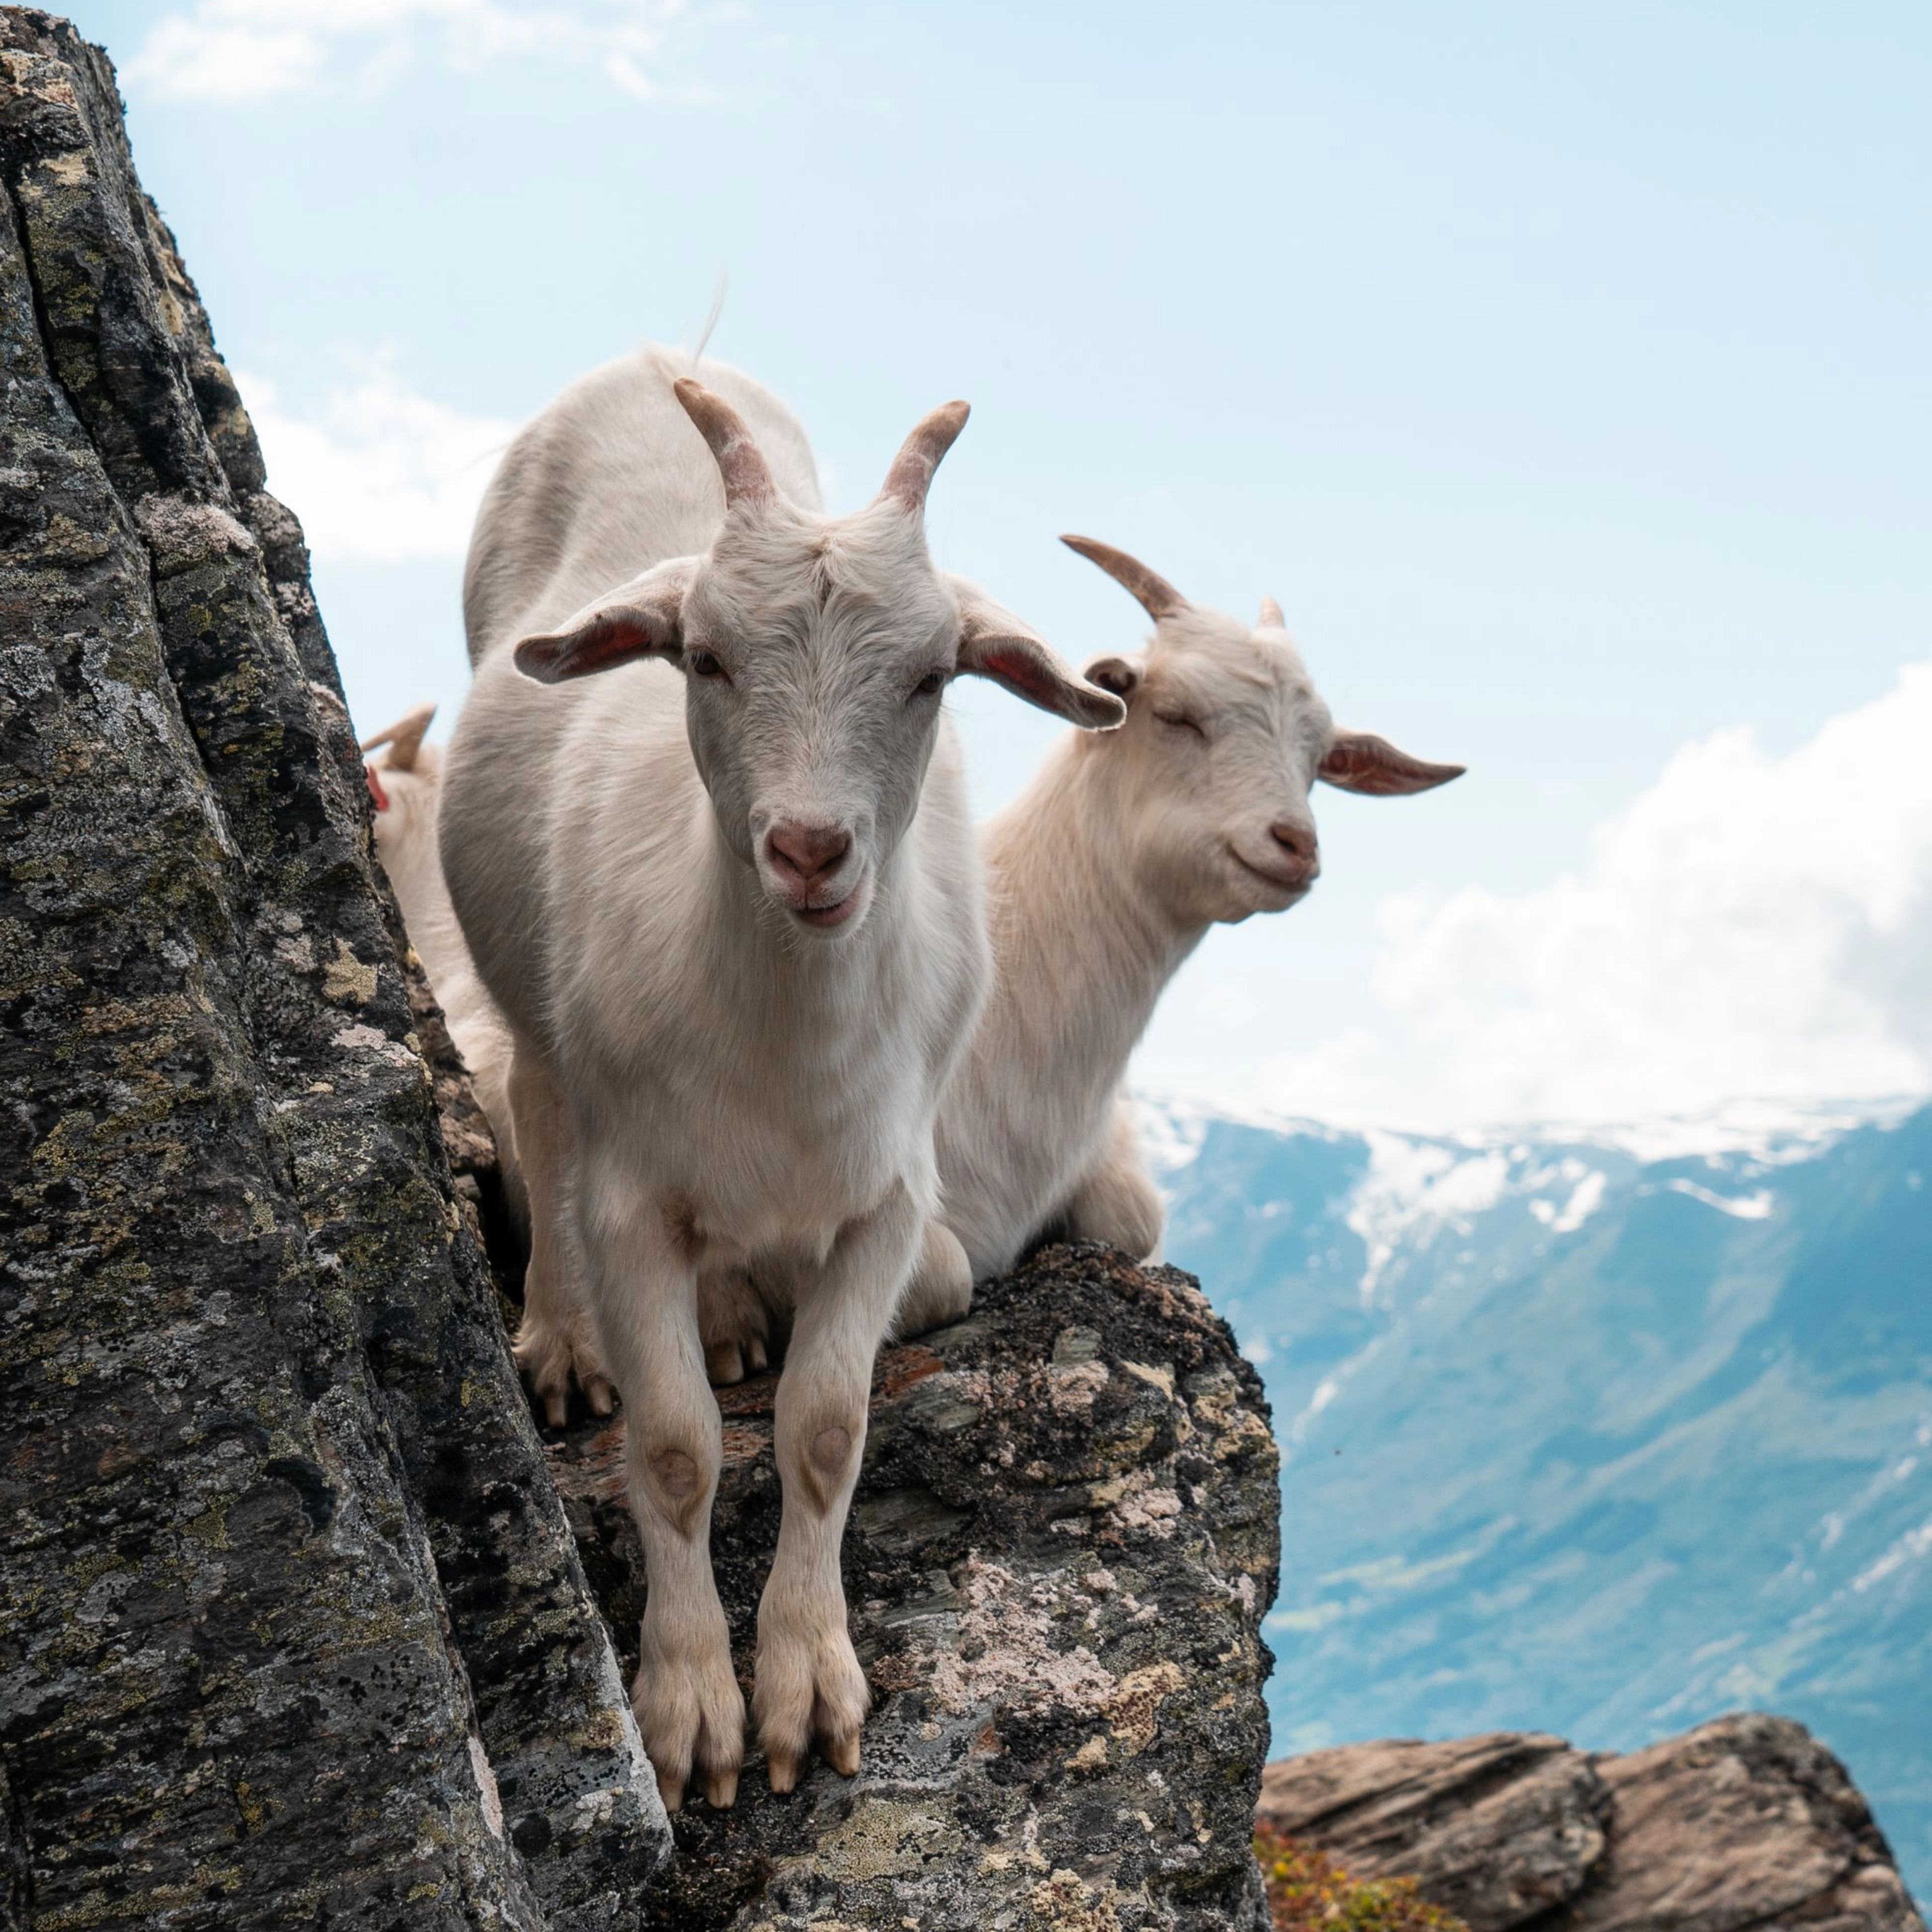 Goats on Dronningstien in Hardanger - Guided hike, Kinsarvik - Lofthus, Norway